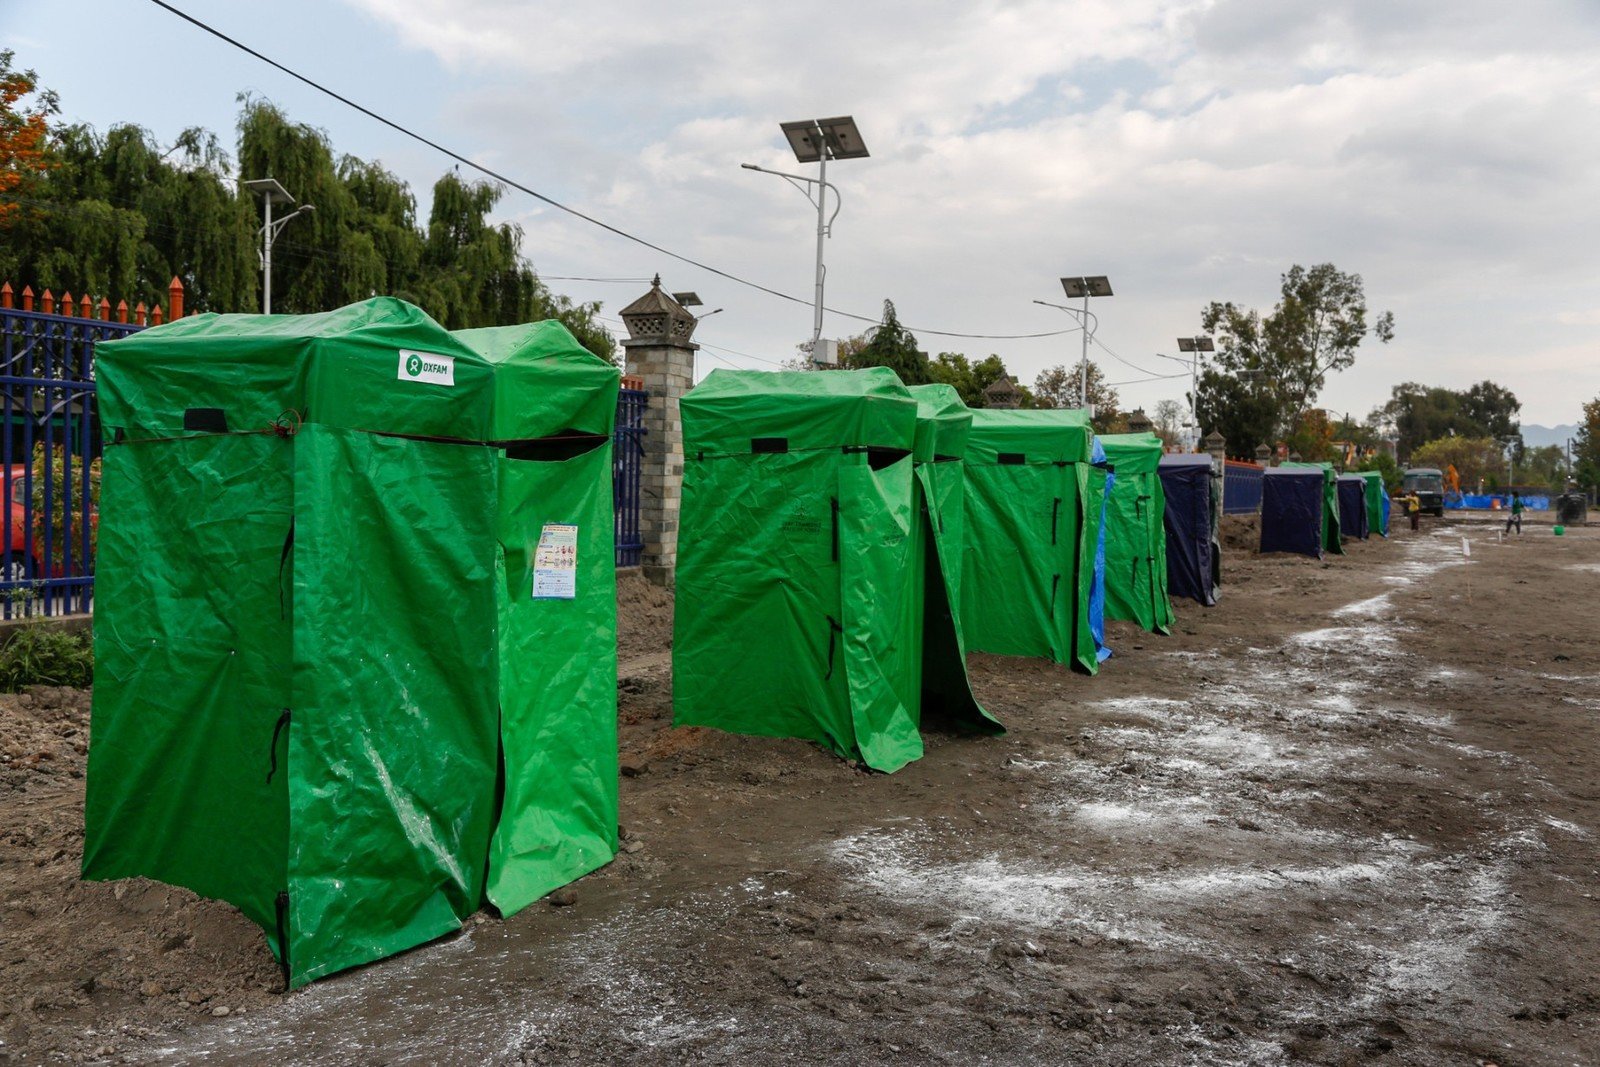 PR4 : 災區的衛生情況開始惡化，樂施會在多個營區緊急搭建衛生設施，如臨時廁所，以防疫症爆發。(Aubrey Wade / Oxfam)